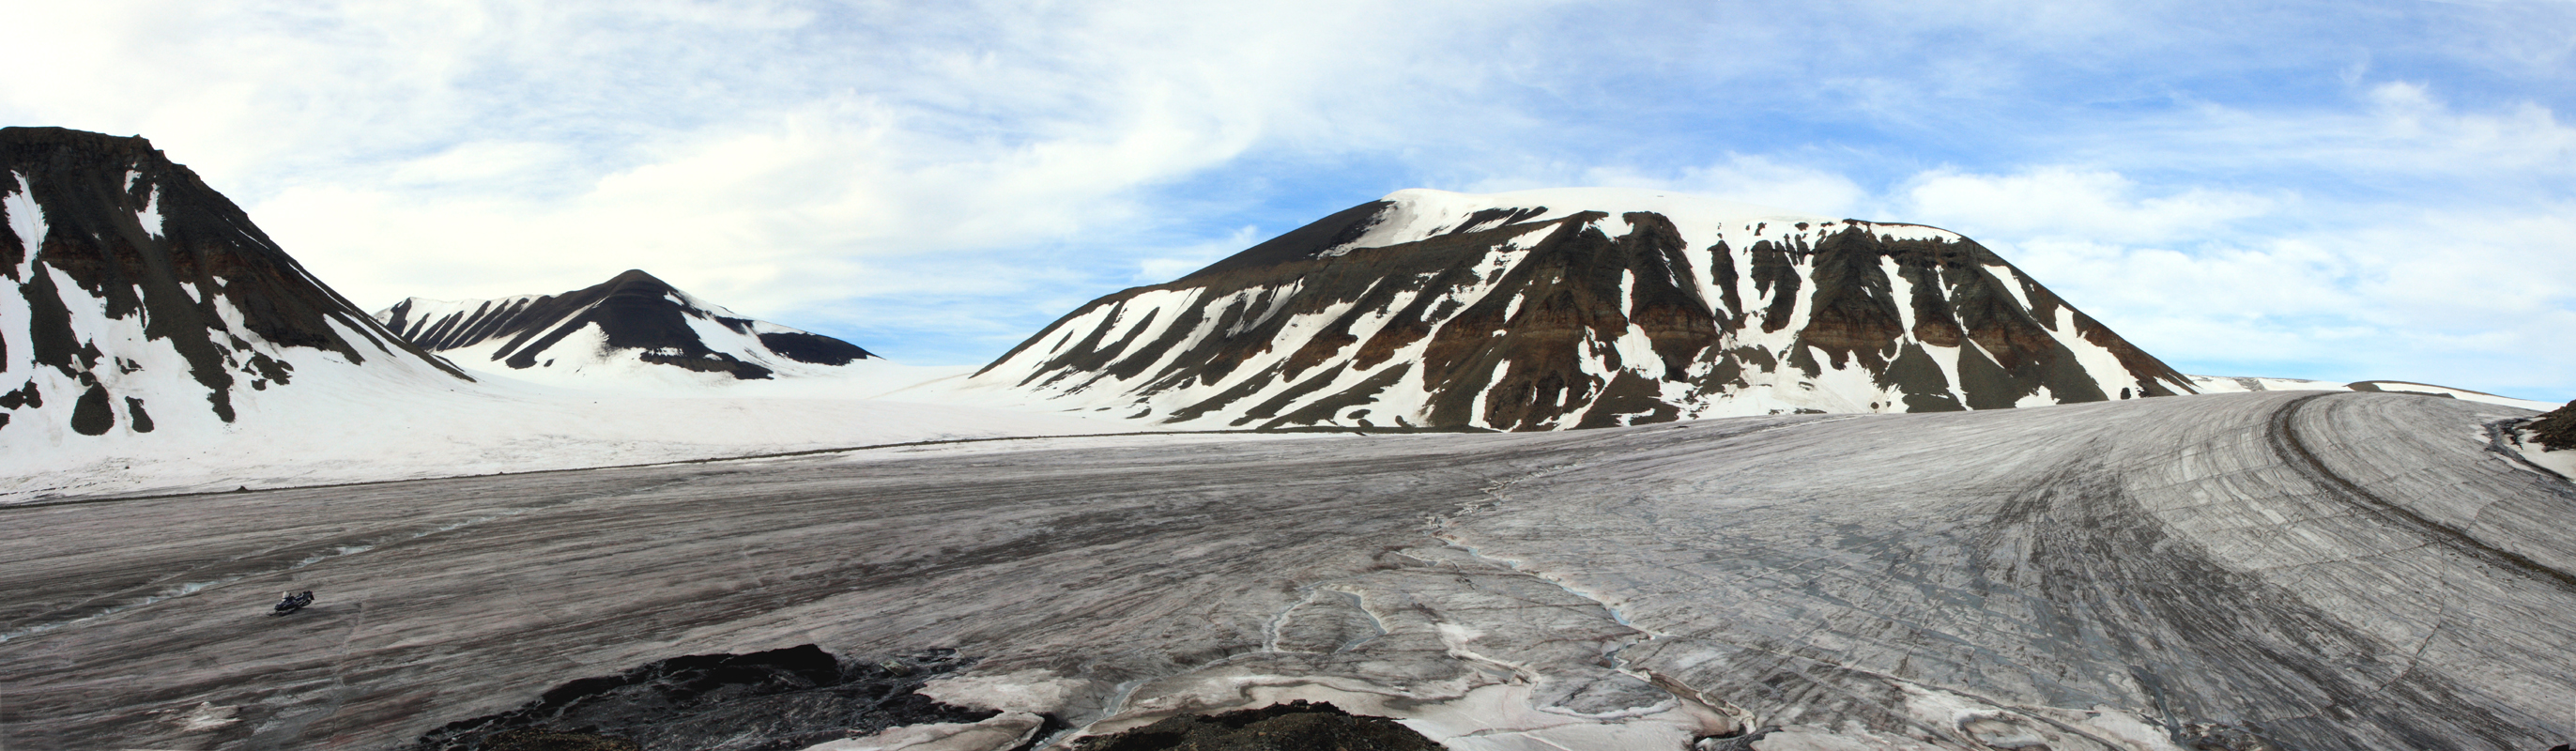 Шпицберген, ледник возле Свеагрувы.